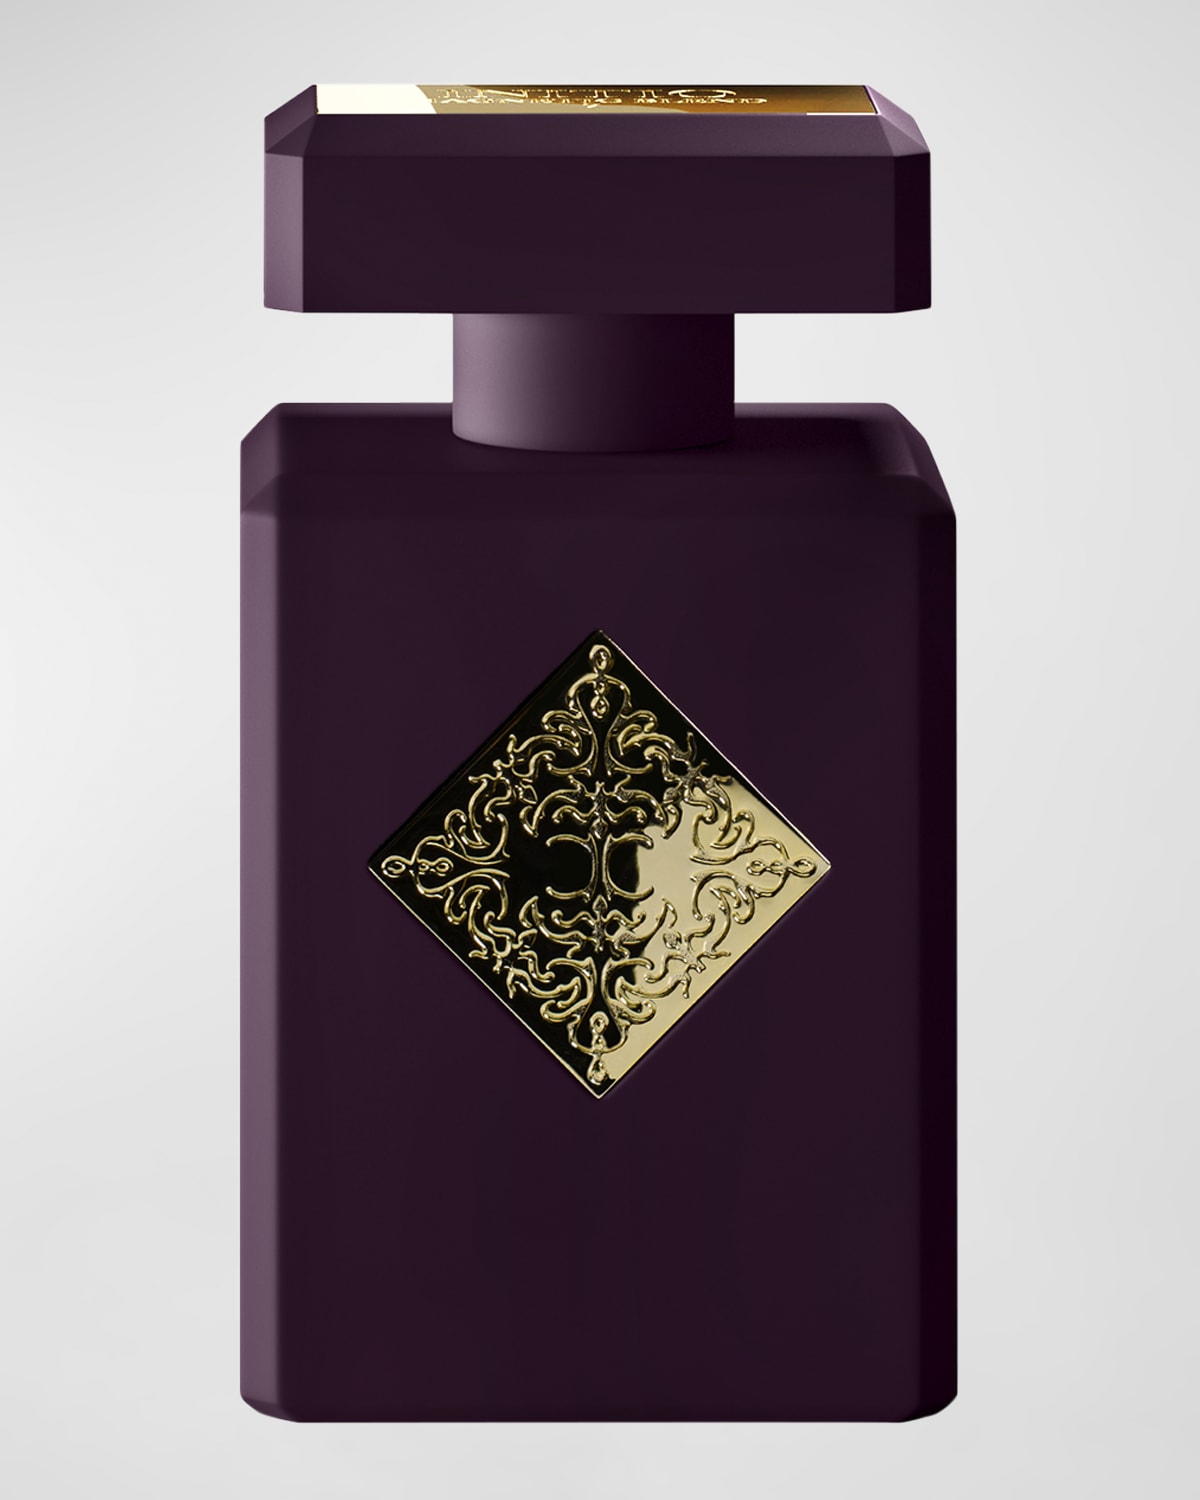 Initio Parfums Prives High Frequency Eau de Parfum, 3.0 oz.